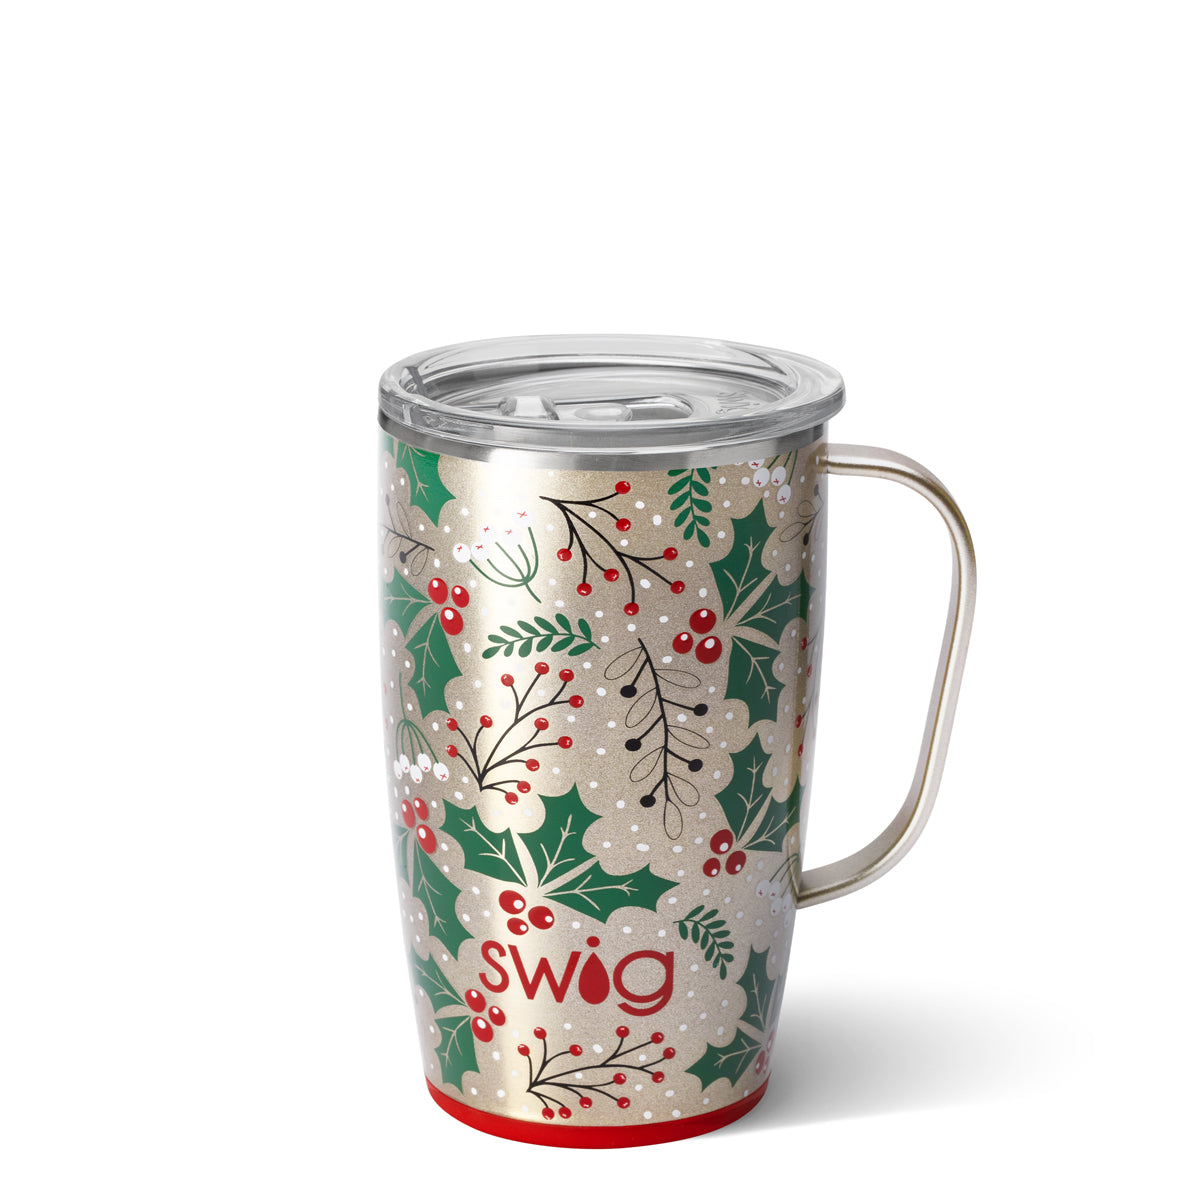 Swig Life 18oz Travel Mug, Insulated Stainless Steel Tumbler with Handle